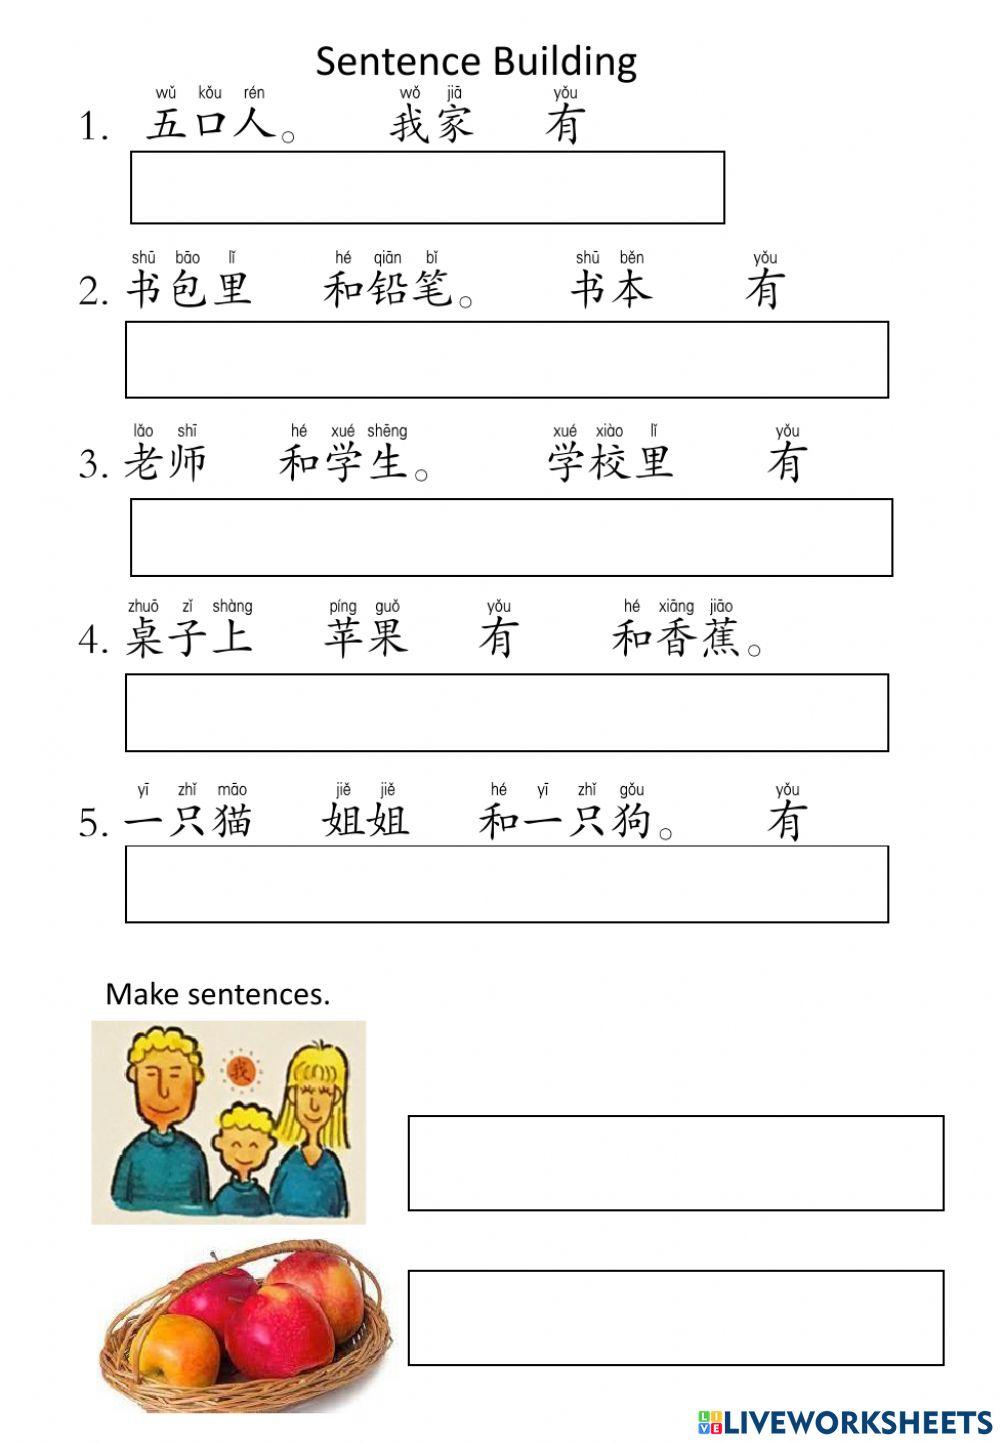 Making Sentences (有）